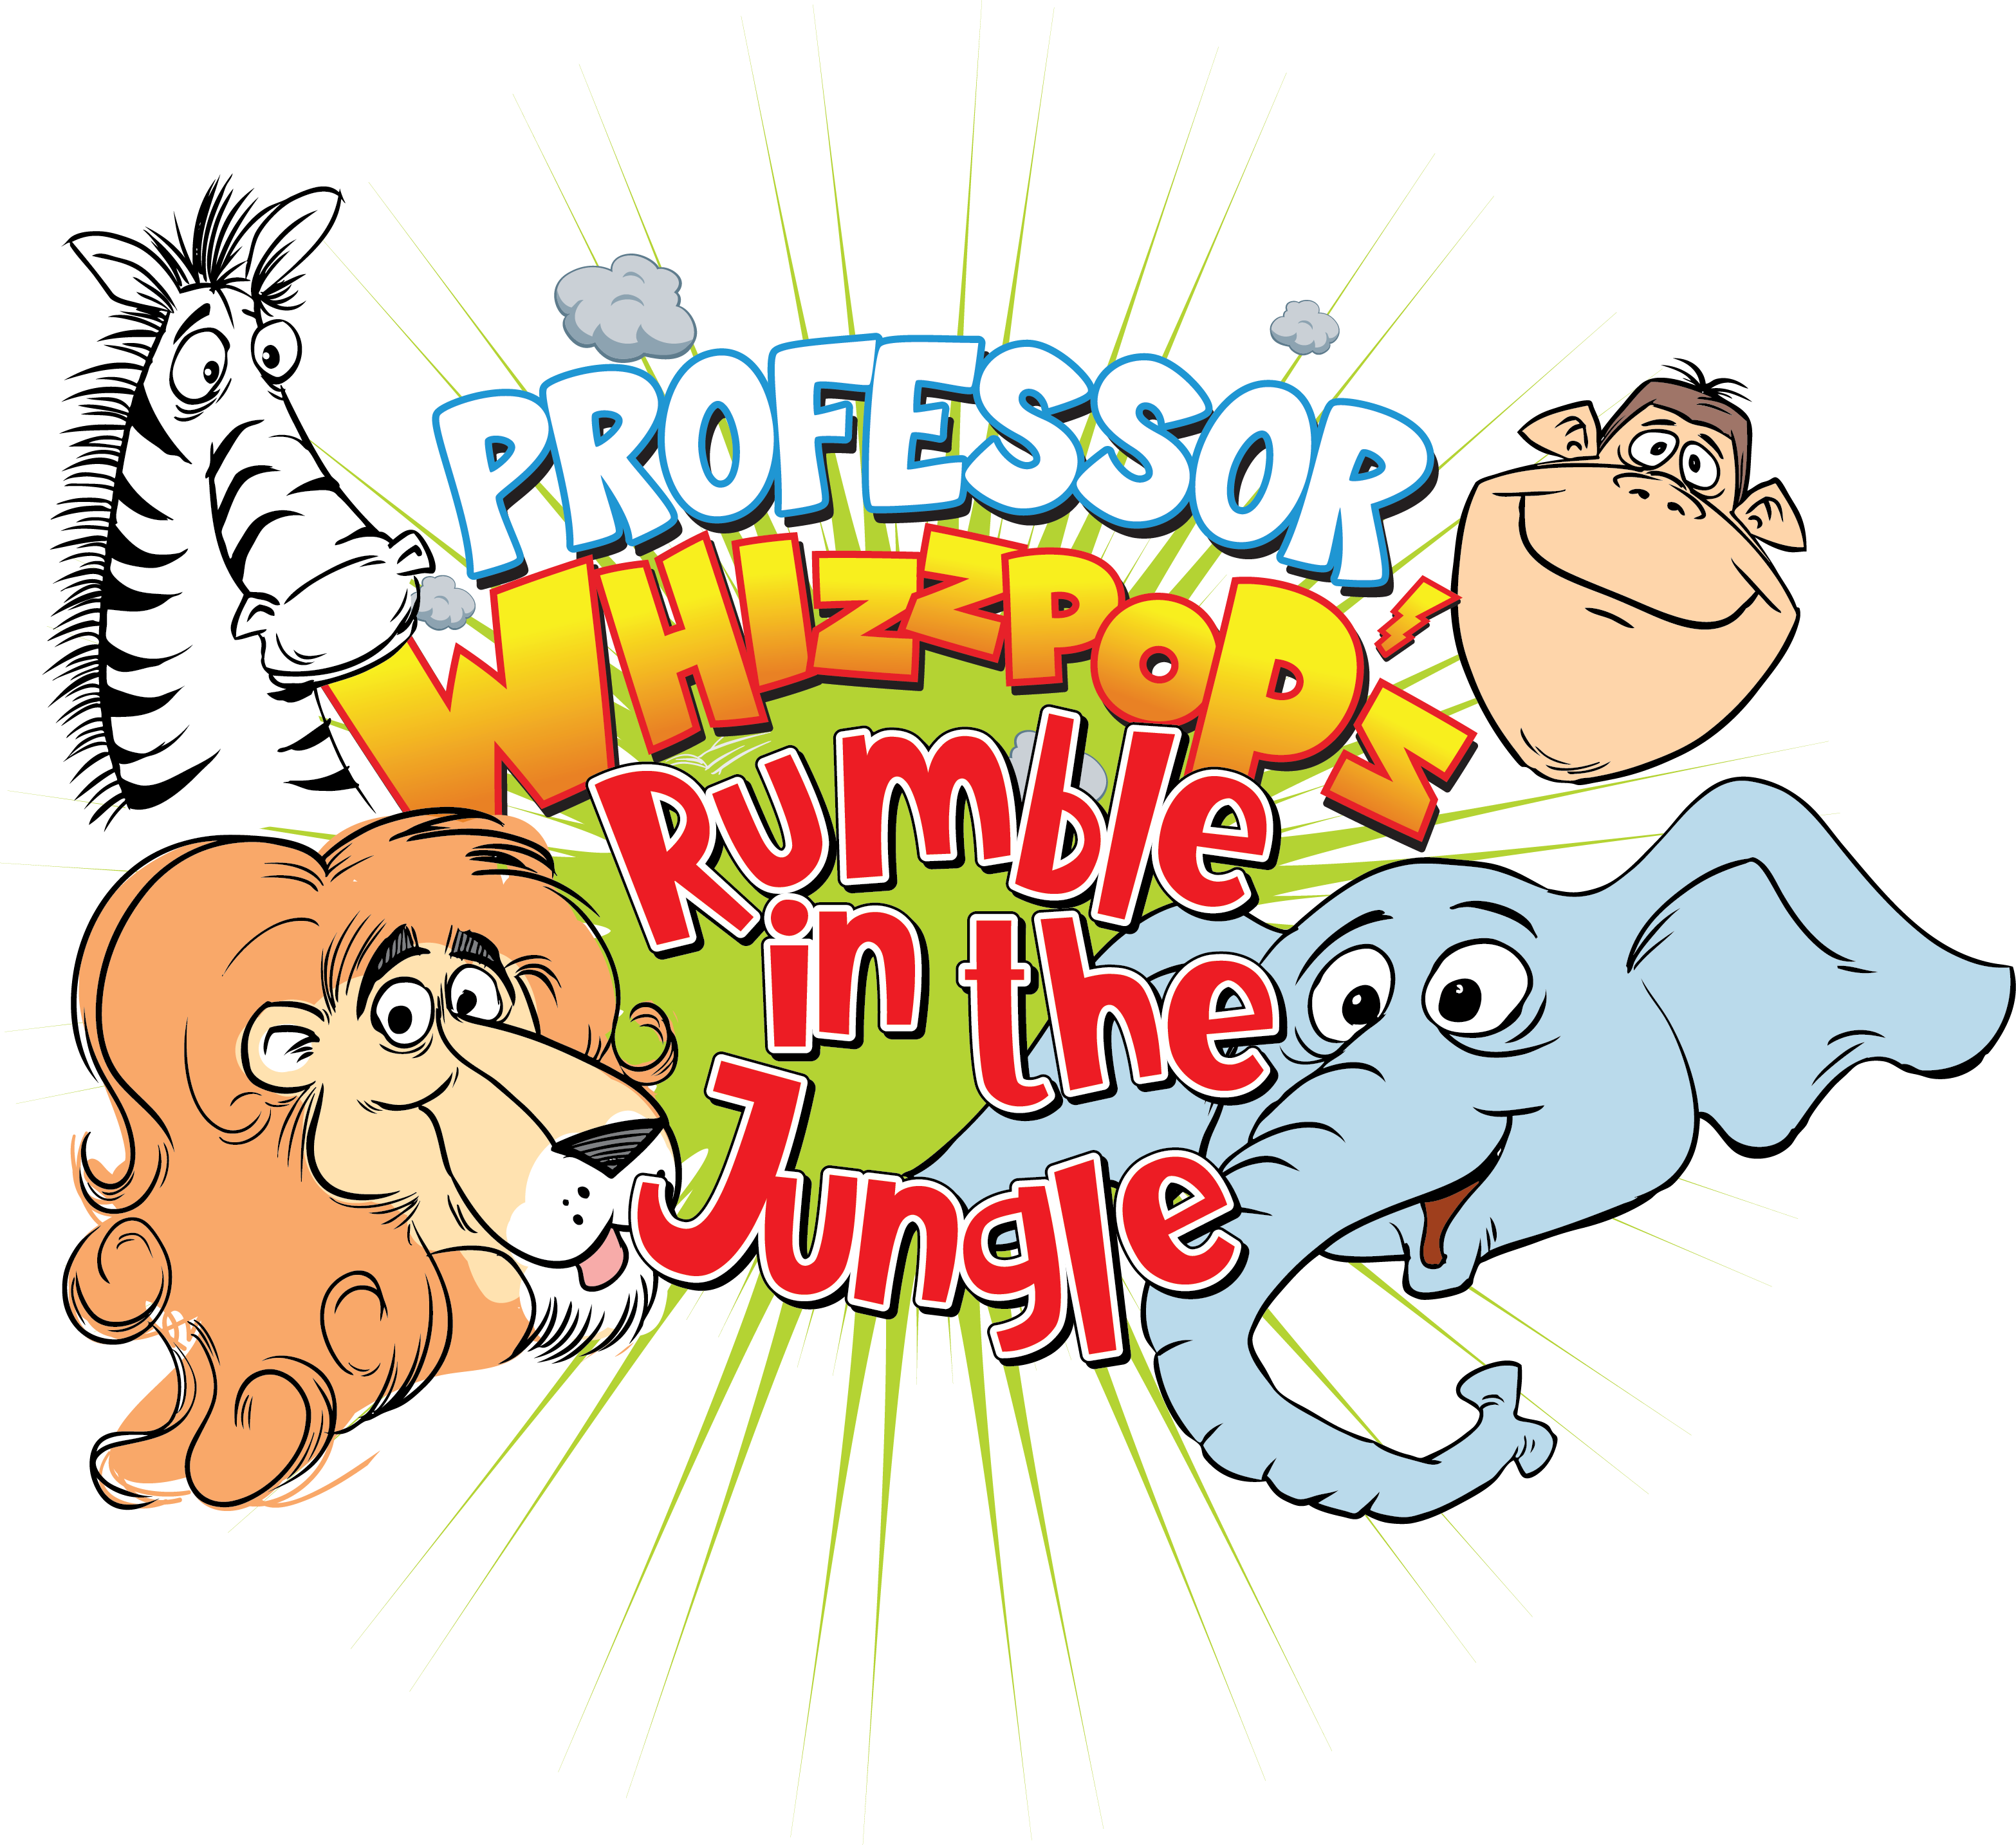 Professor Whizzpop's "Rumble in the Jungle"